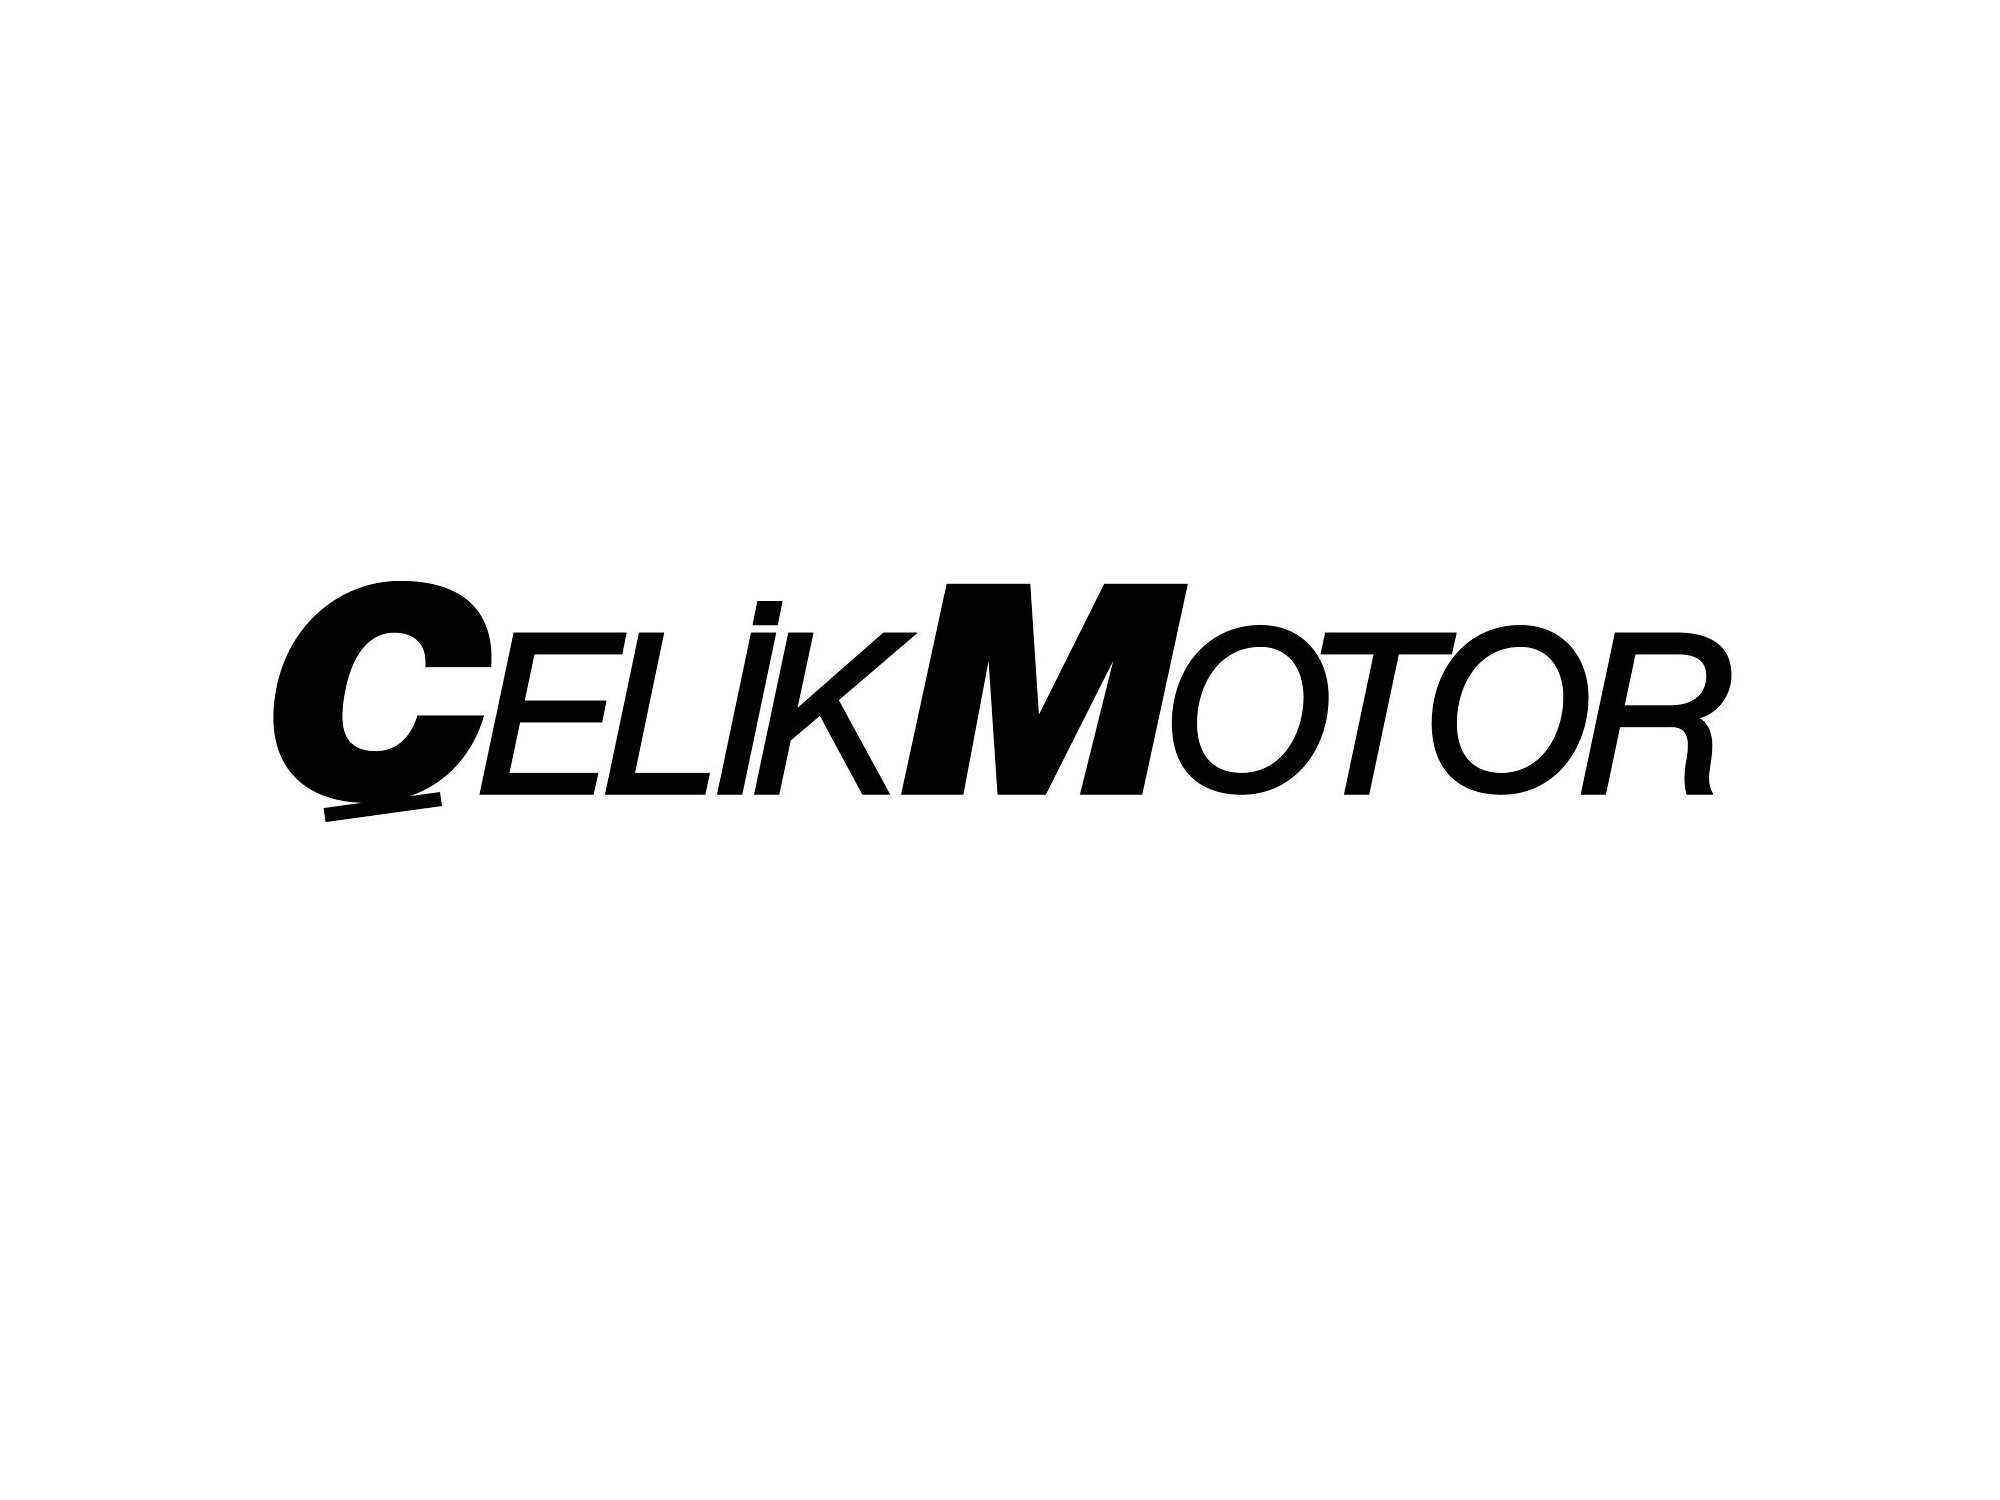 Celik Motor Brand Logo